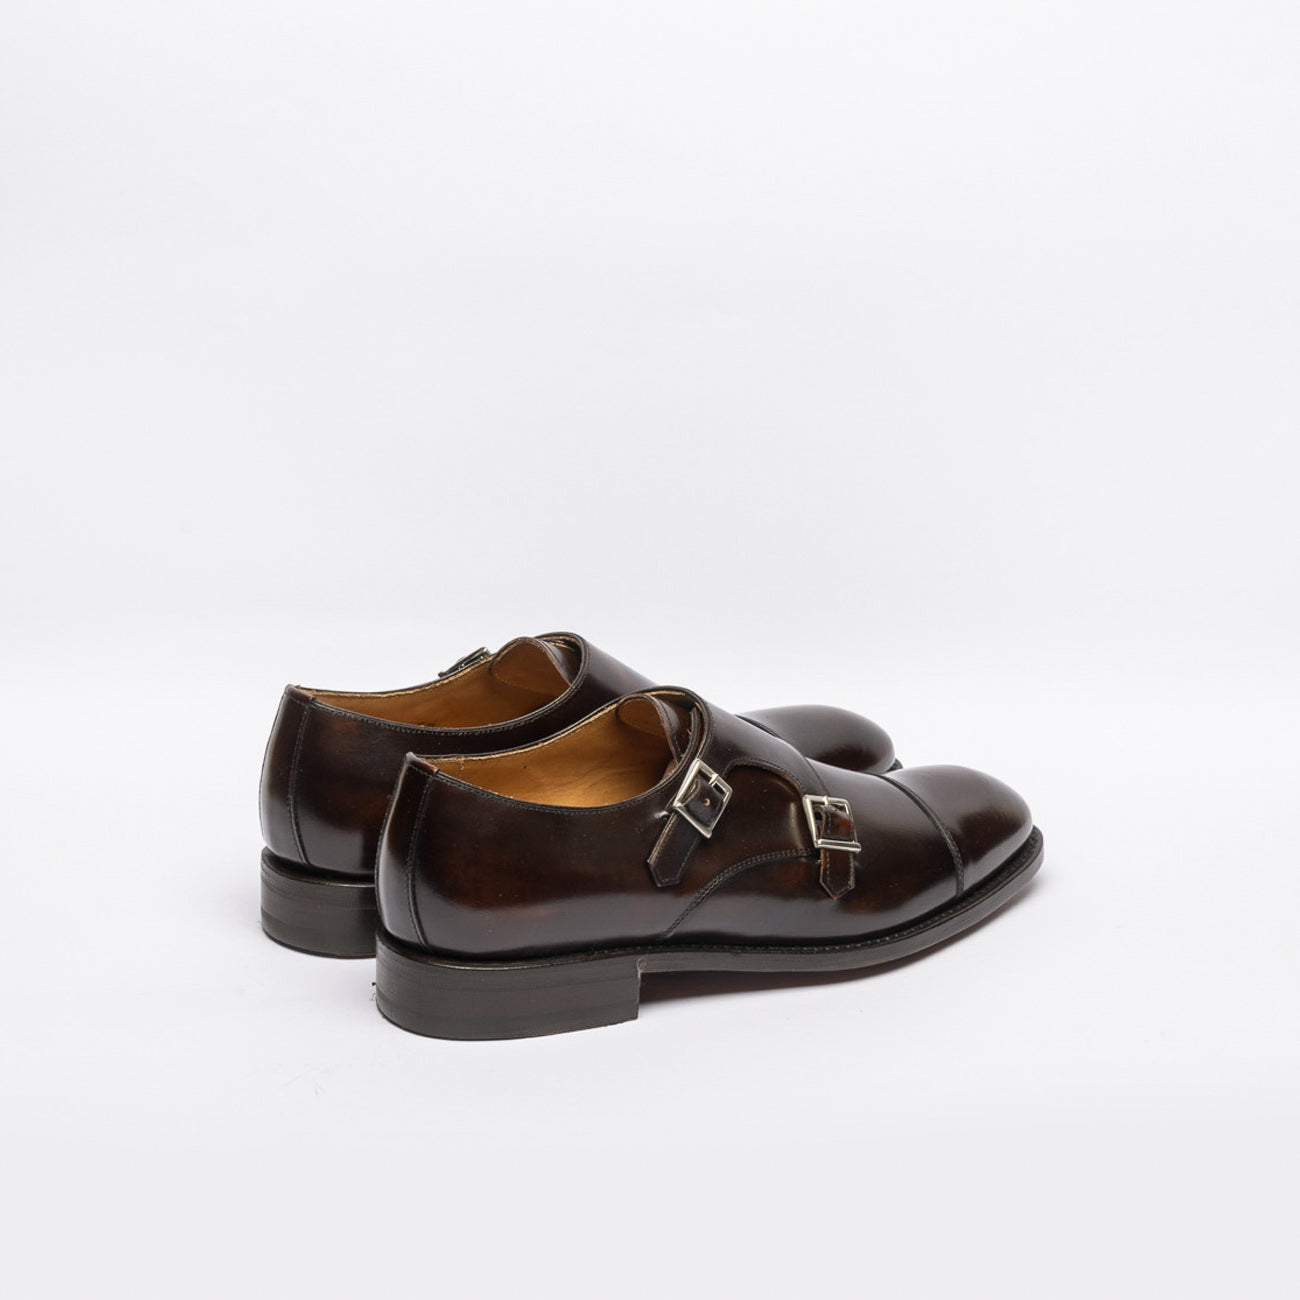 Berwick 5441 double buckle shoe in brown leather